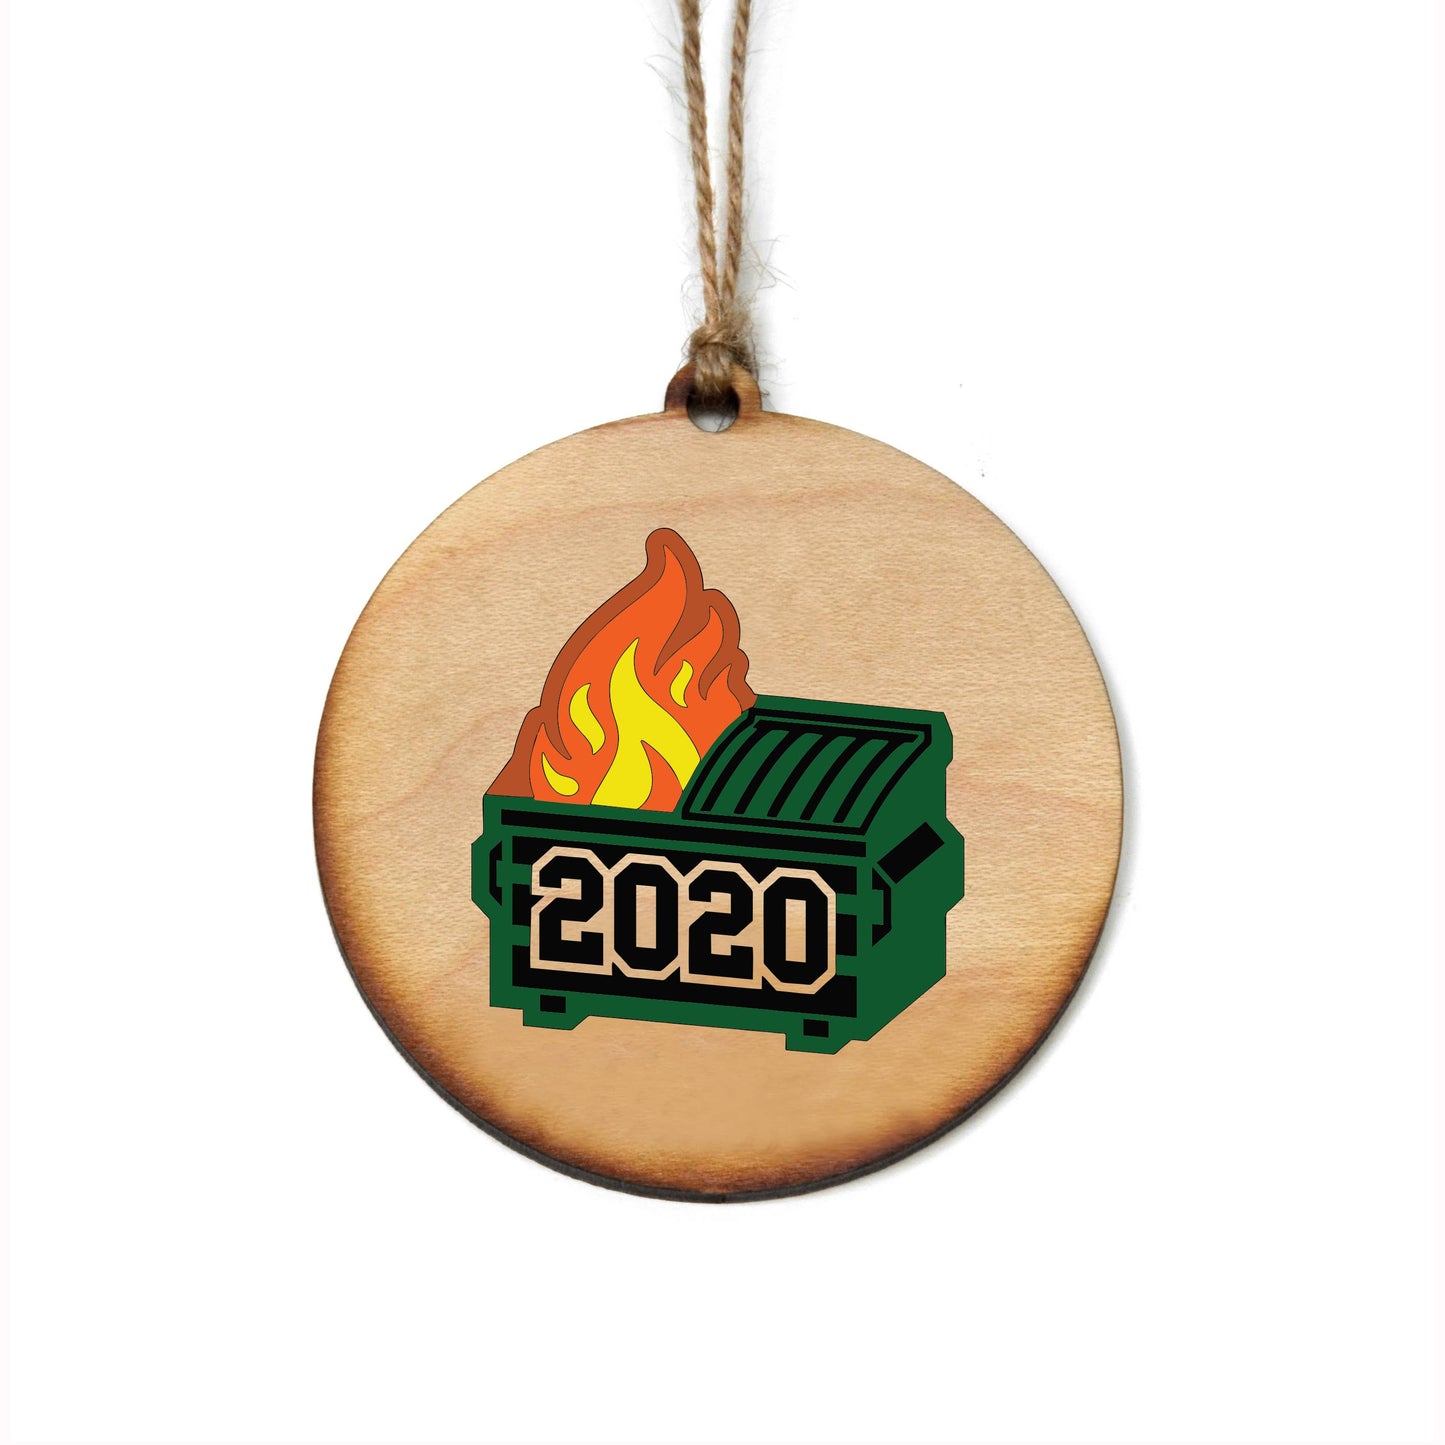 Dumpster Fire 2020 Ornaments